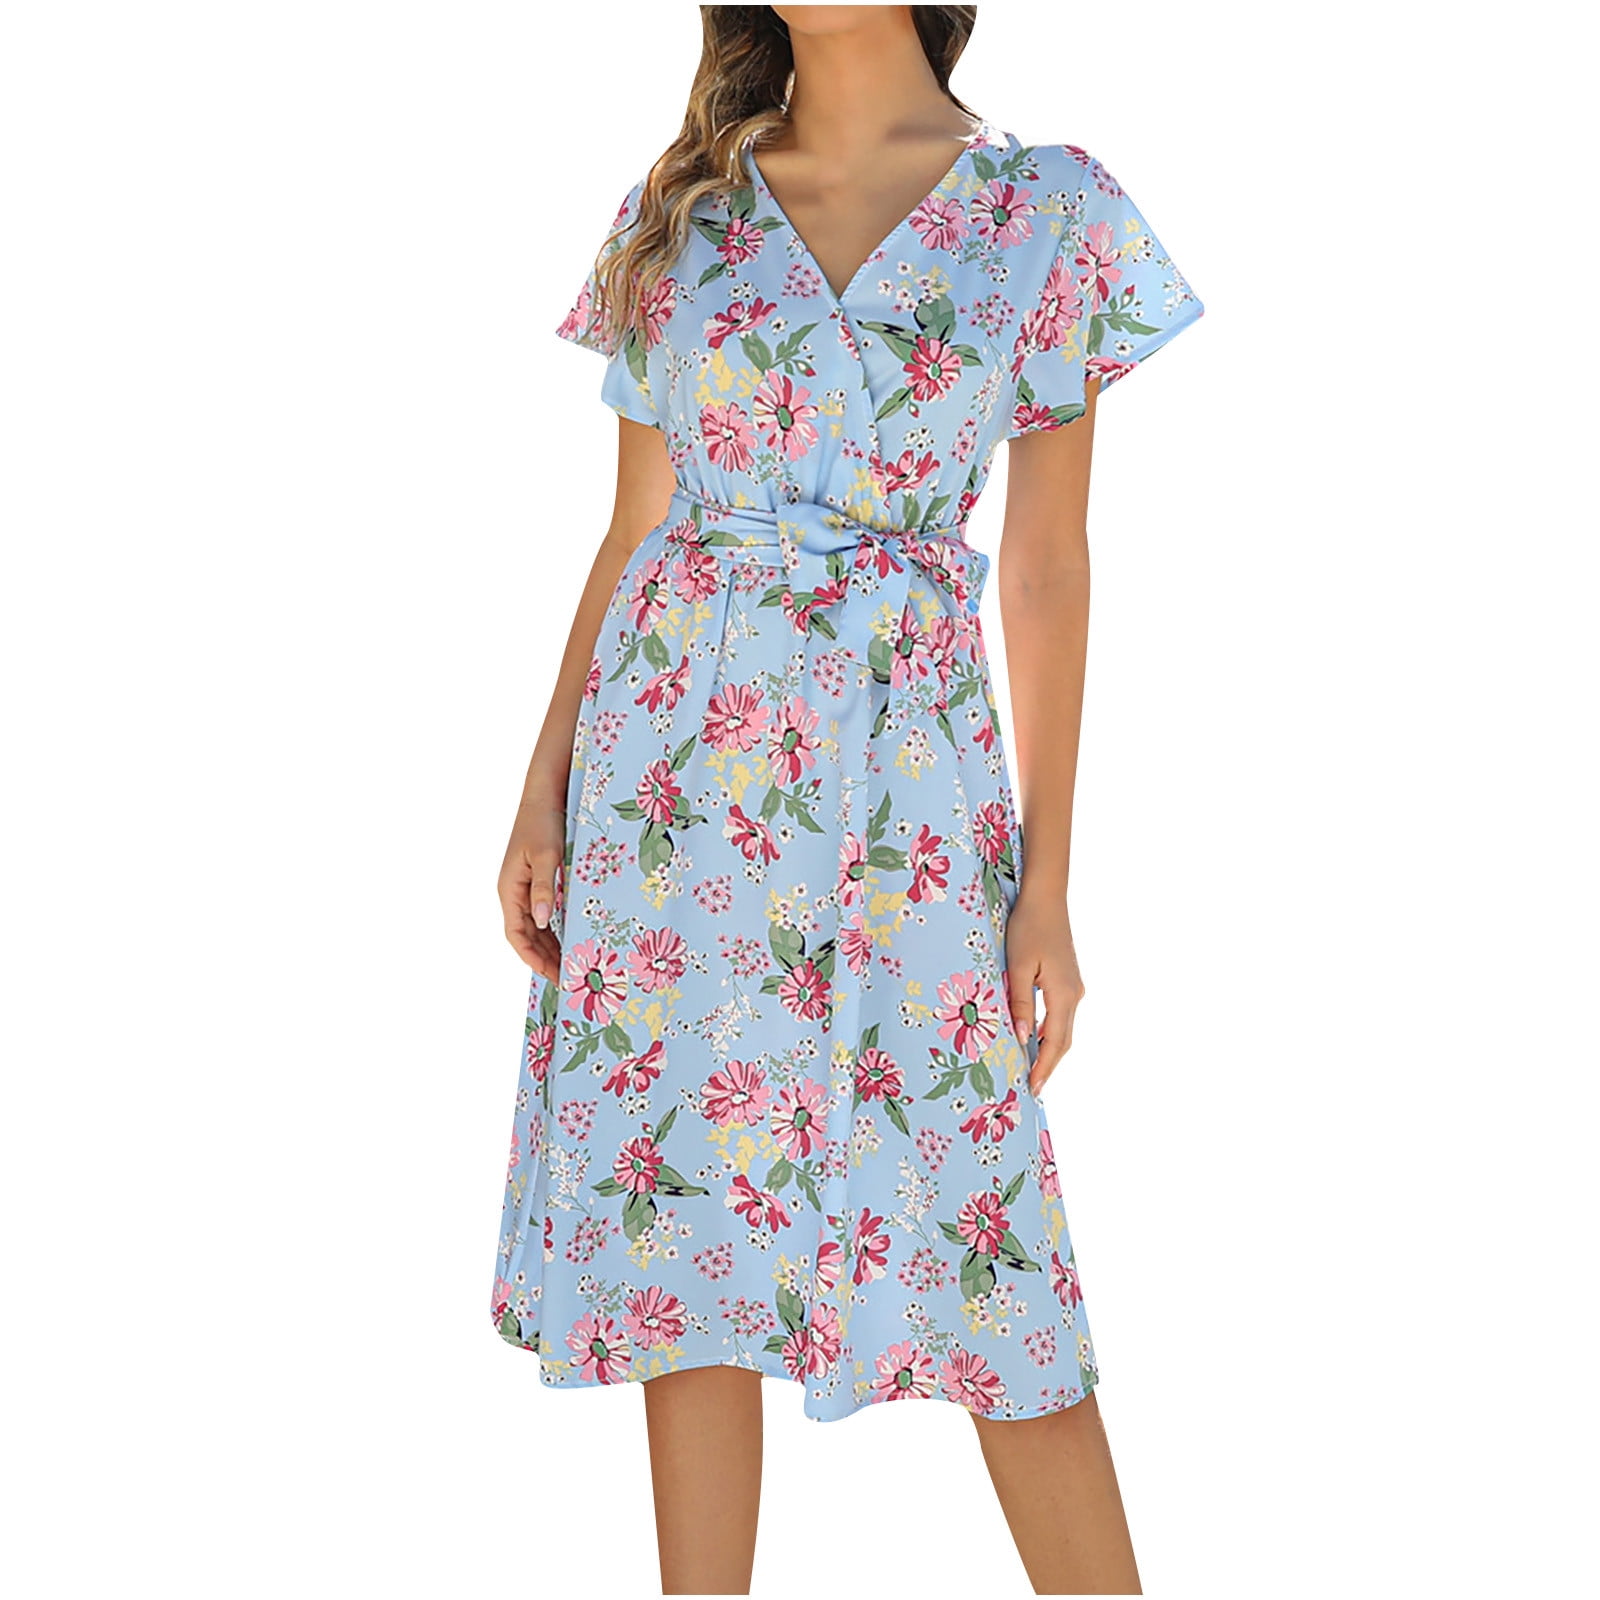 Fesfesfes Women Dress Spring Casual Bandage Floral Print Dress Short ...